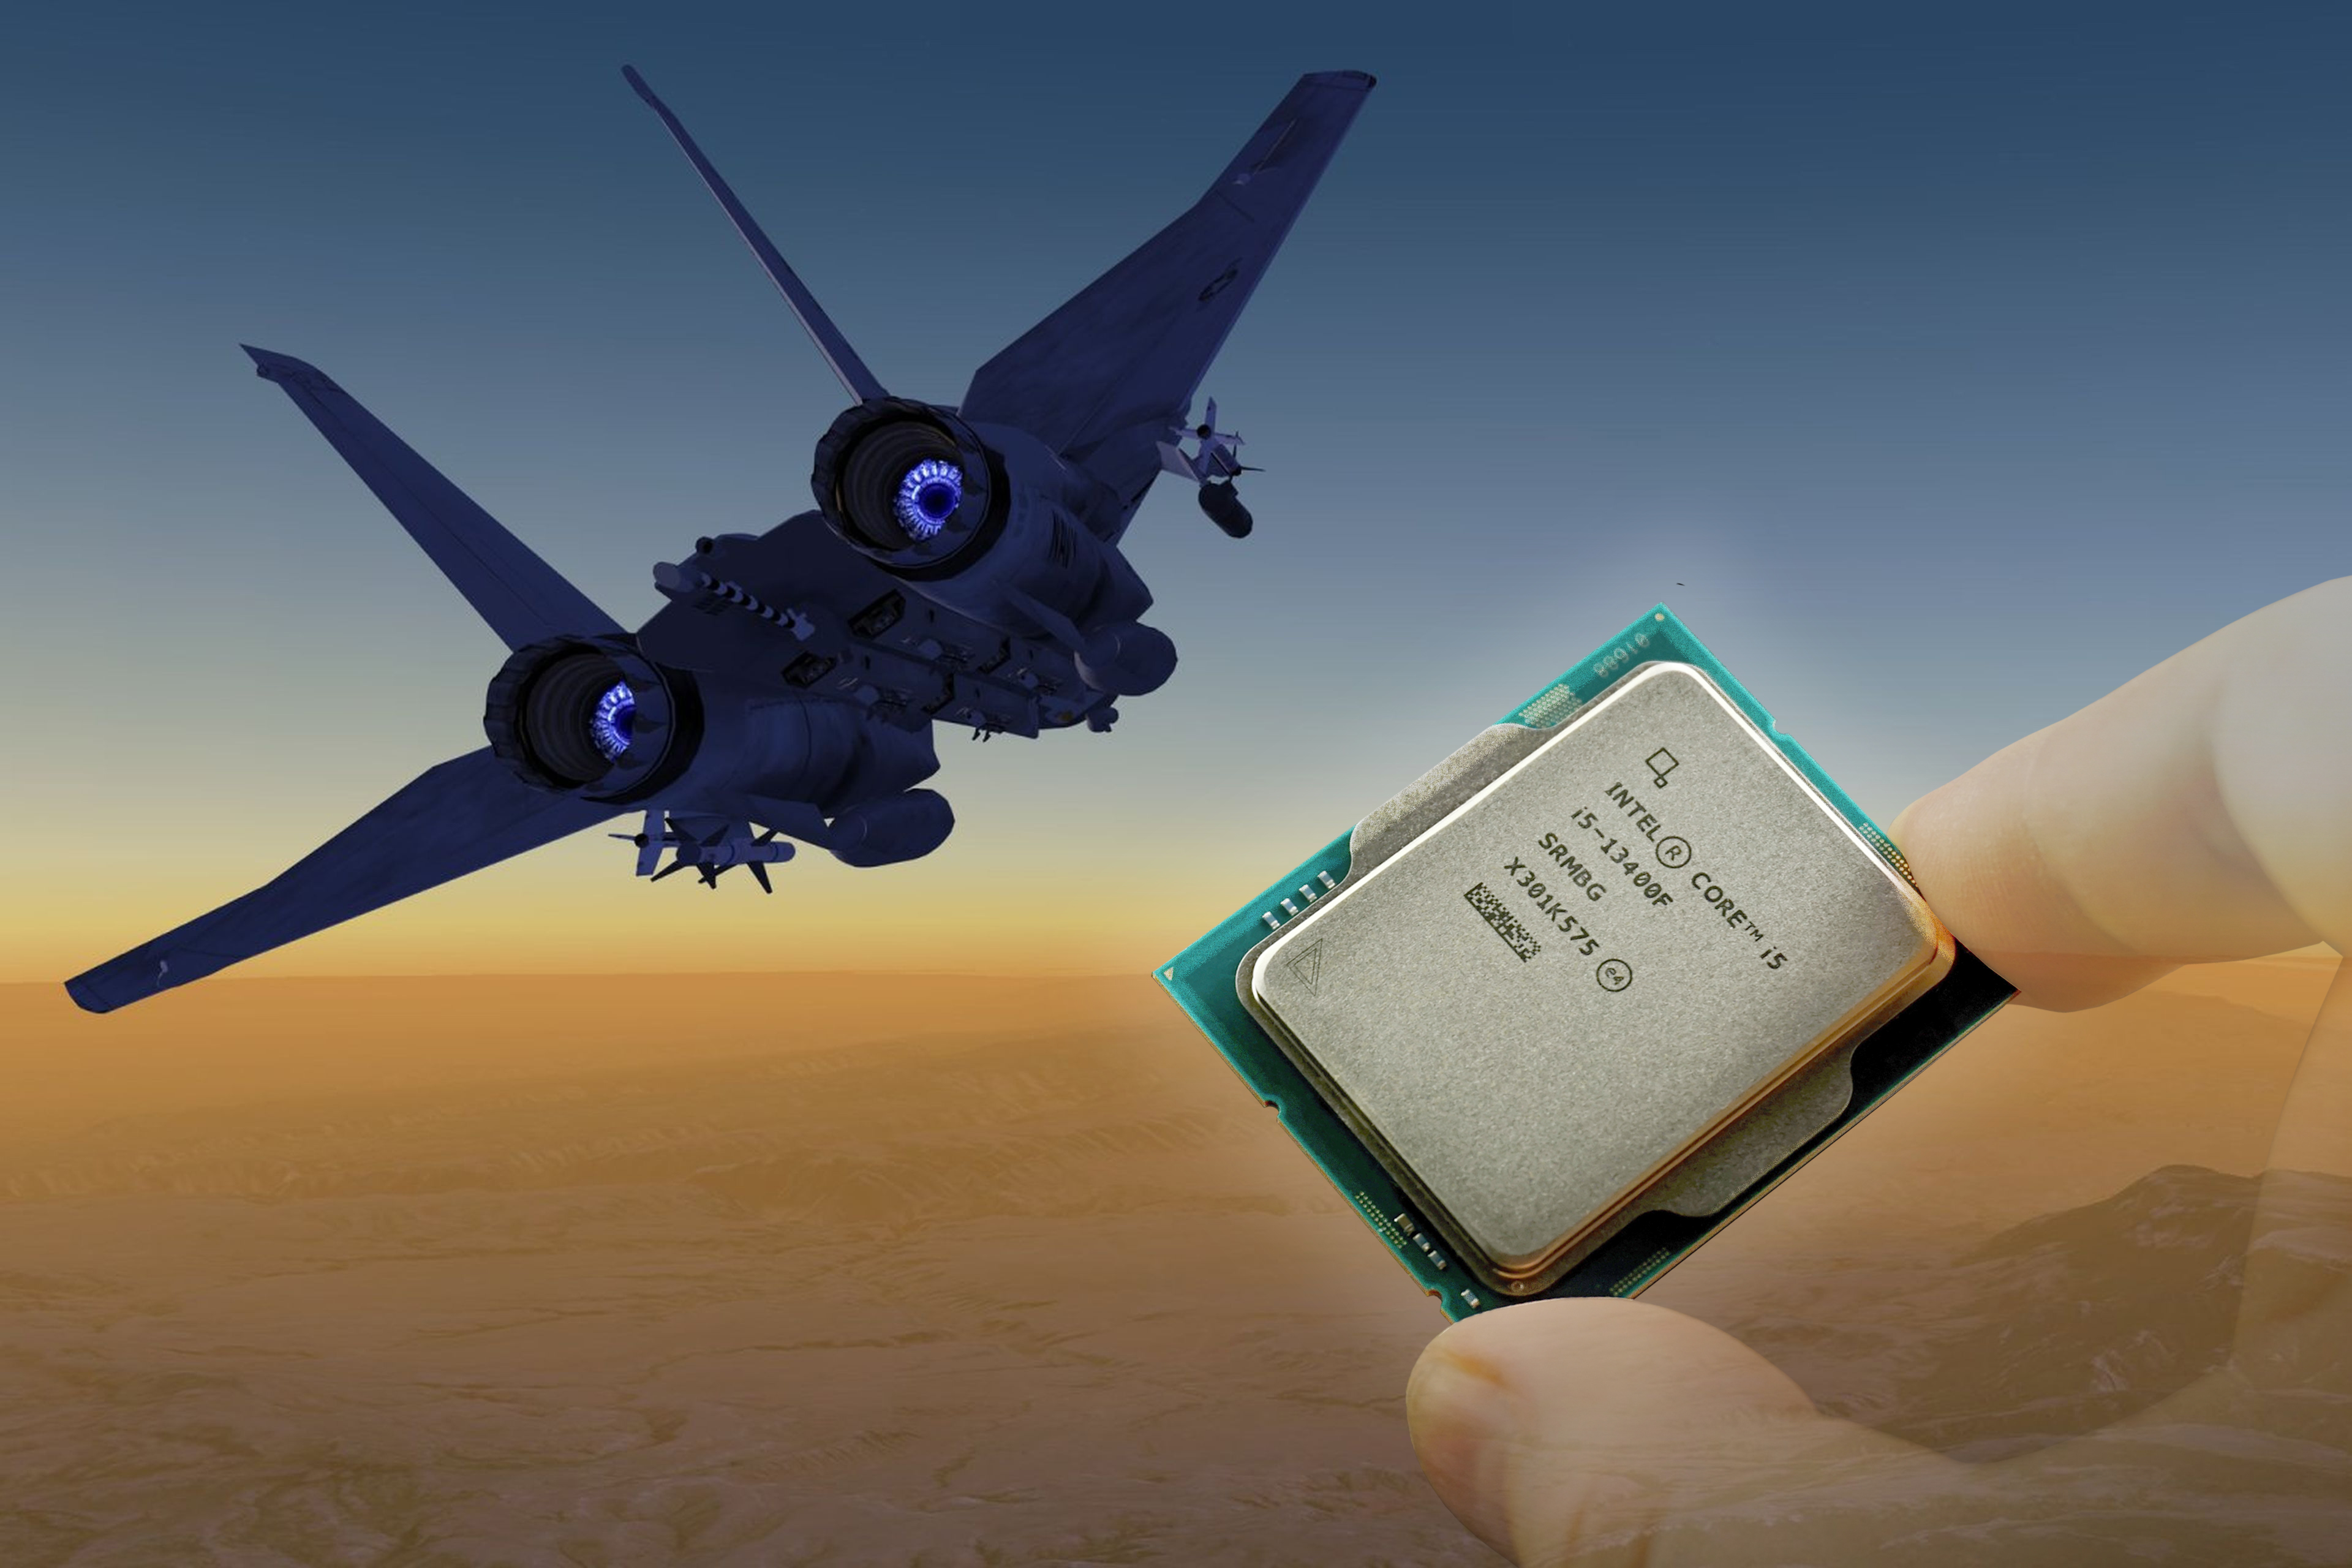 Intel Core i5 13400F review